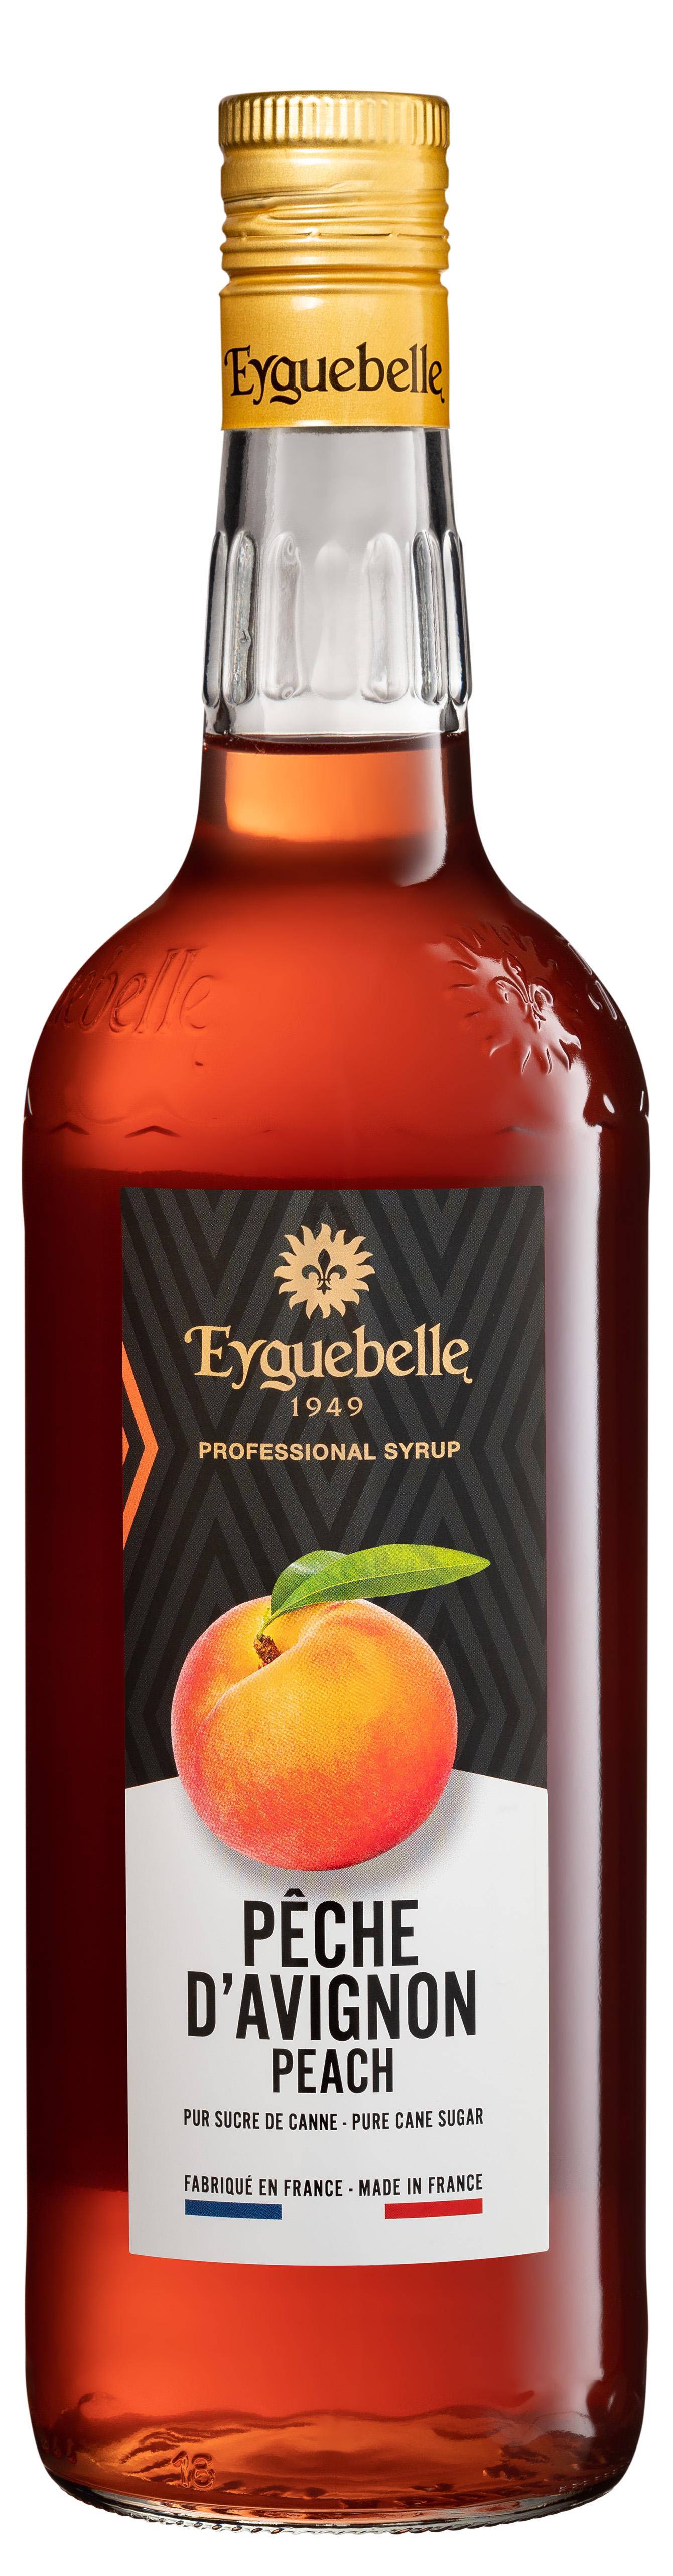 Сироп Eyguebelle Provencal peach (3217)